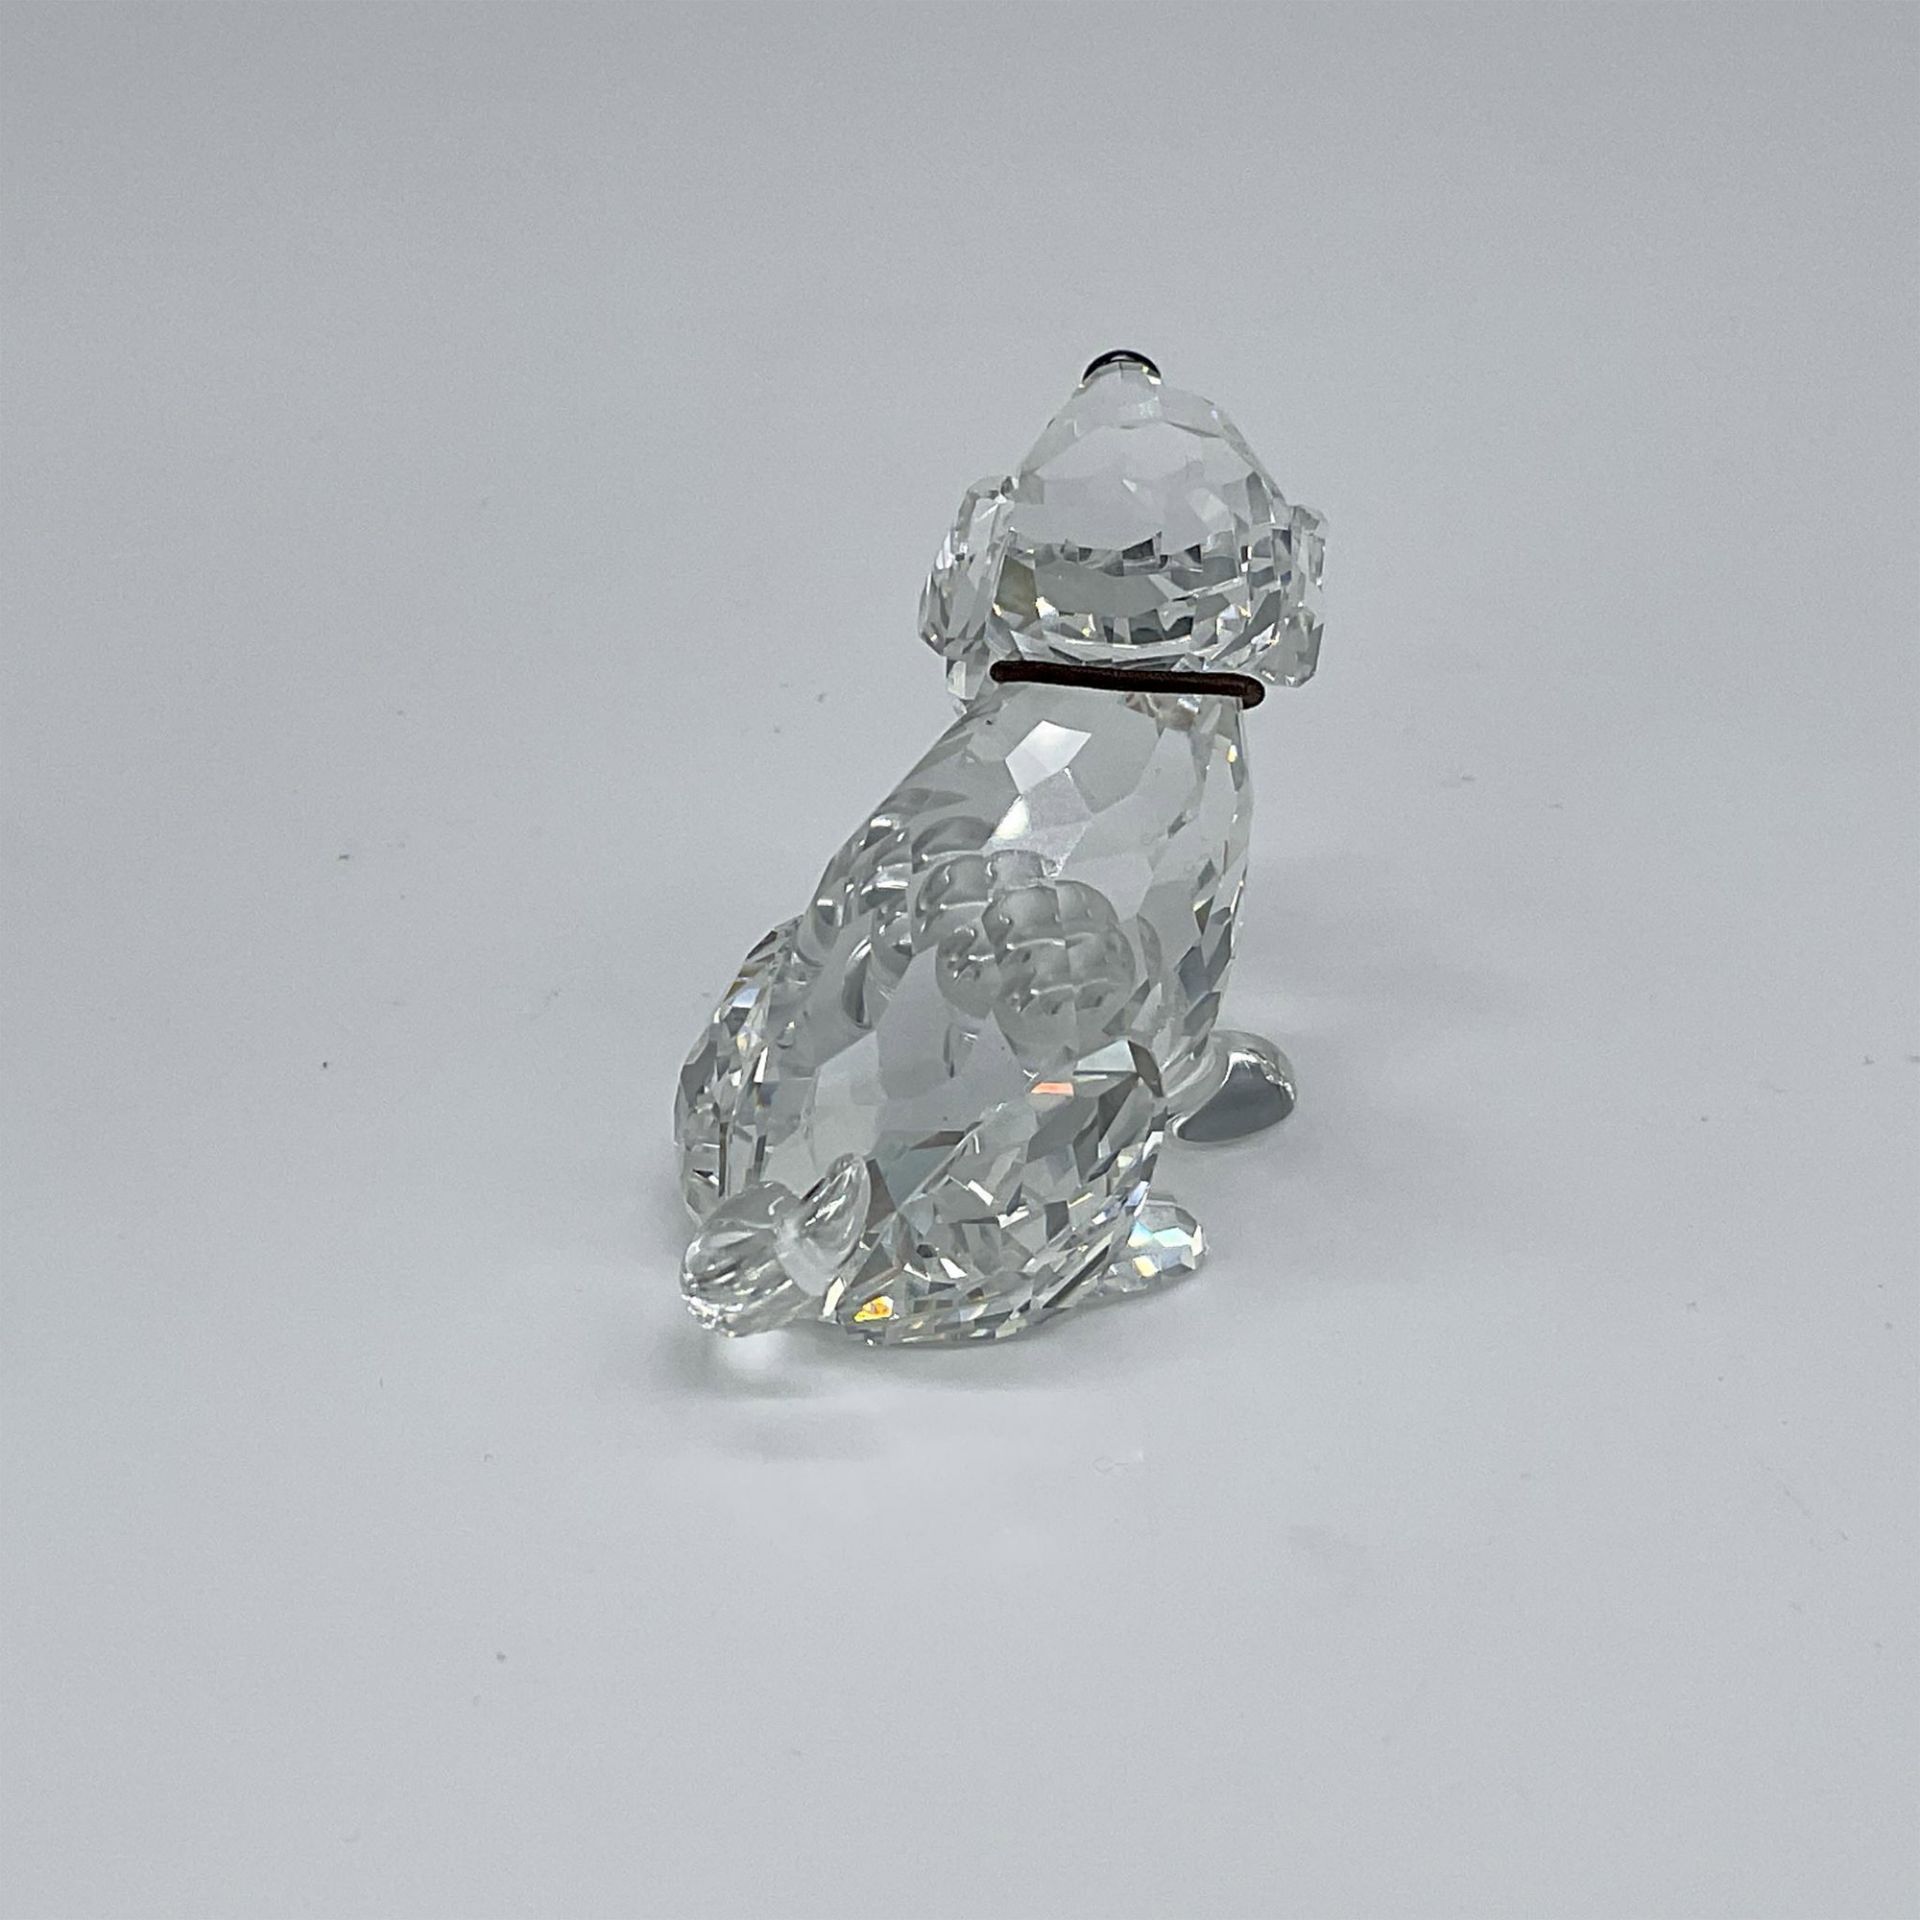 Swarovski Crystal Figurine St Bernard Puppy 201111 - Image 2 of 4